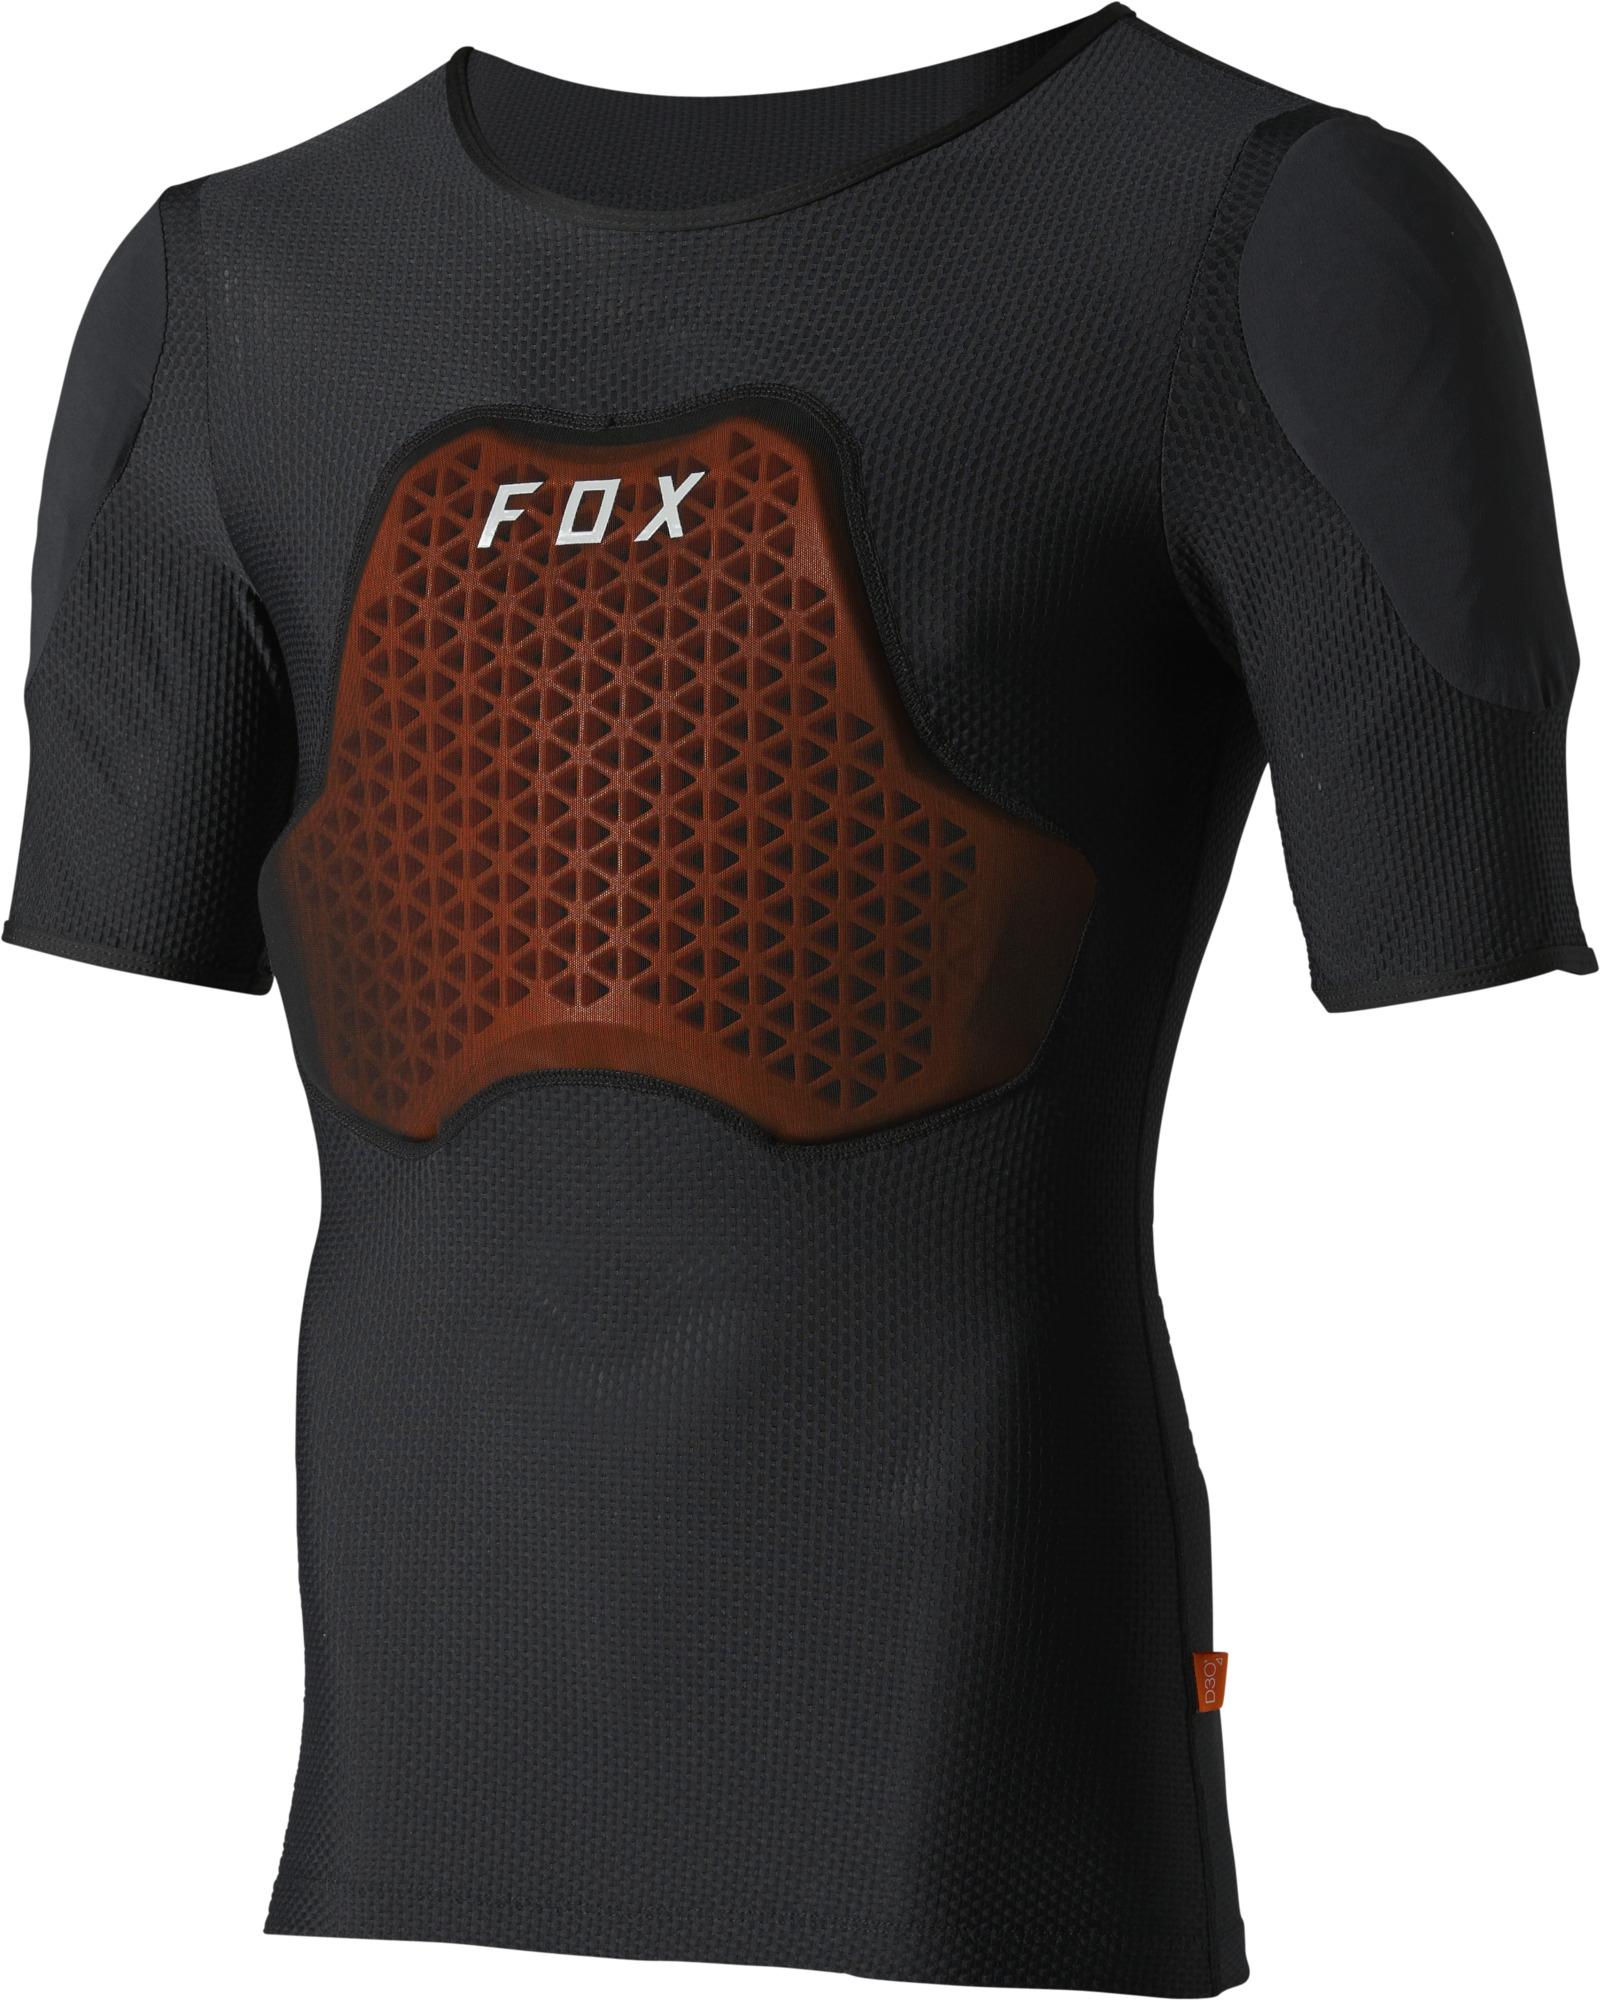 Fox Racing Baseframe Pro Short Sleeved Body Protector - Black